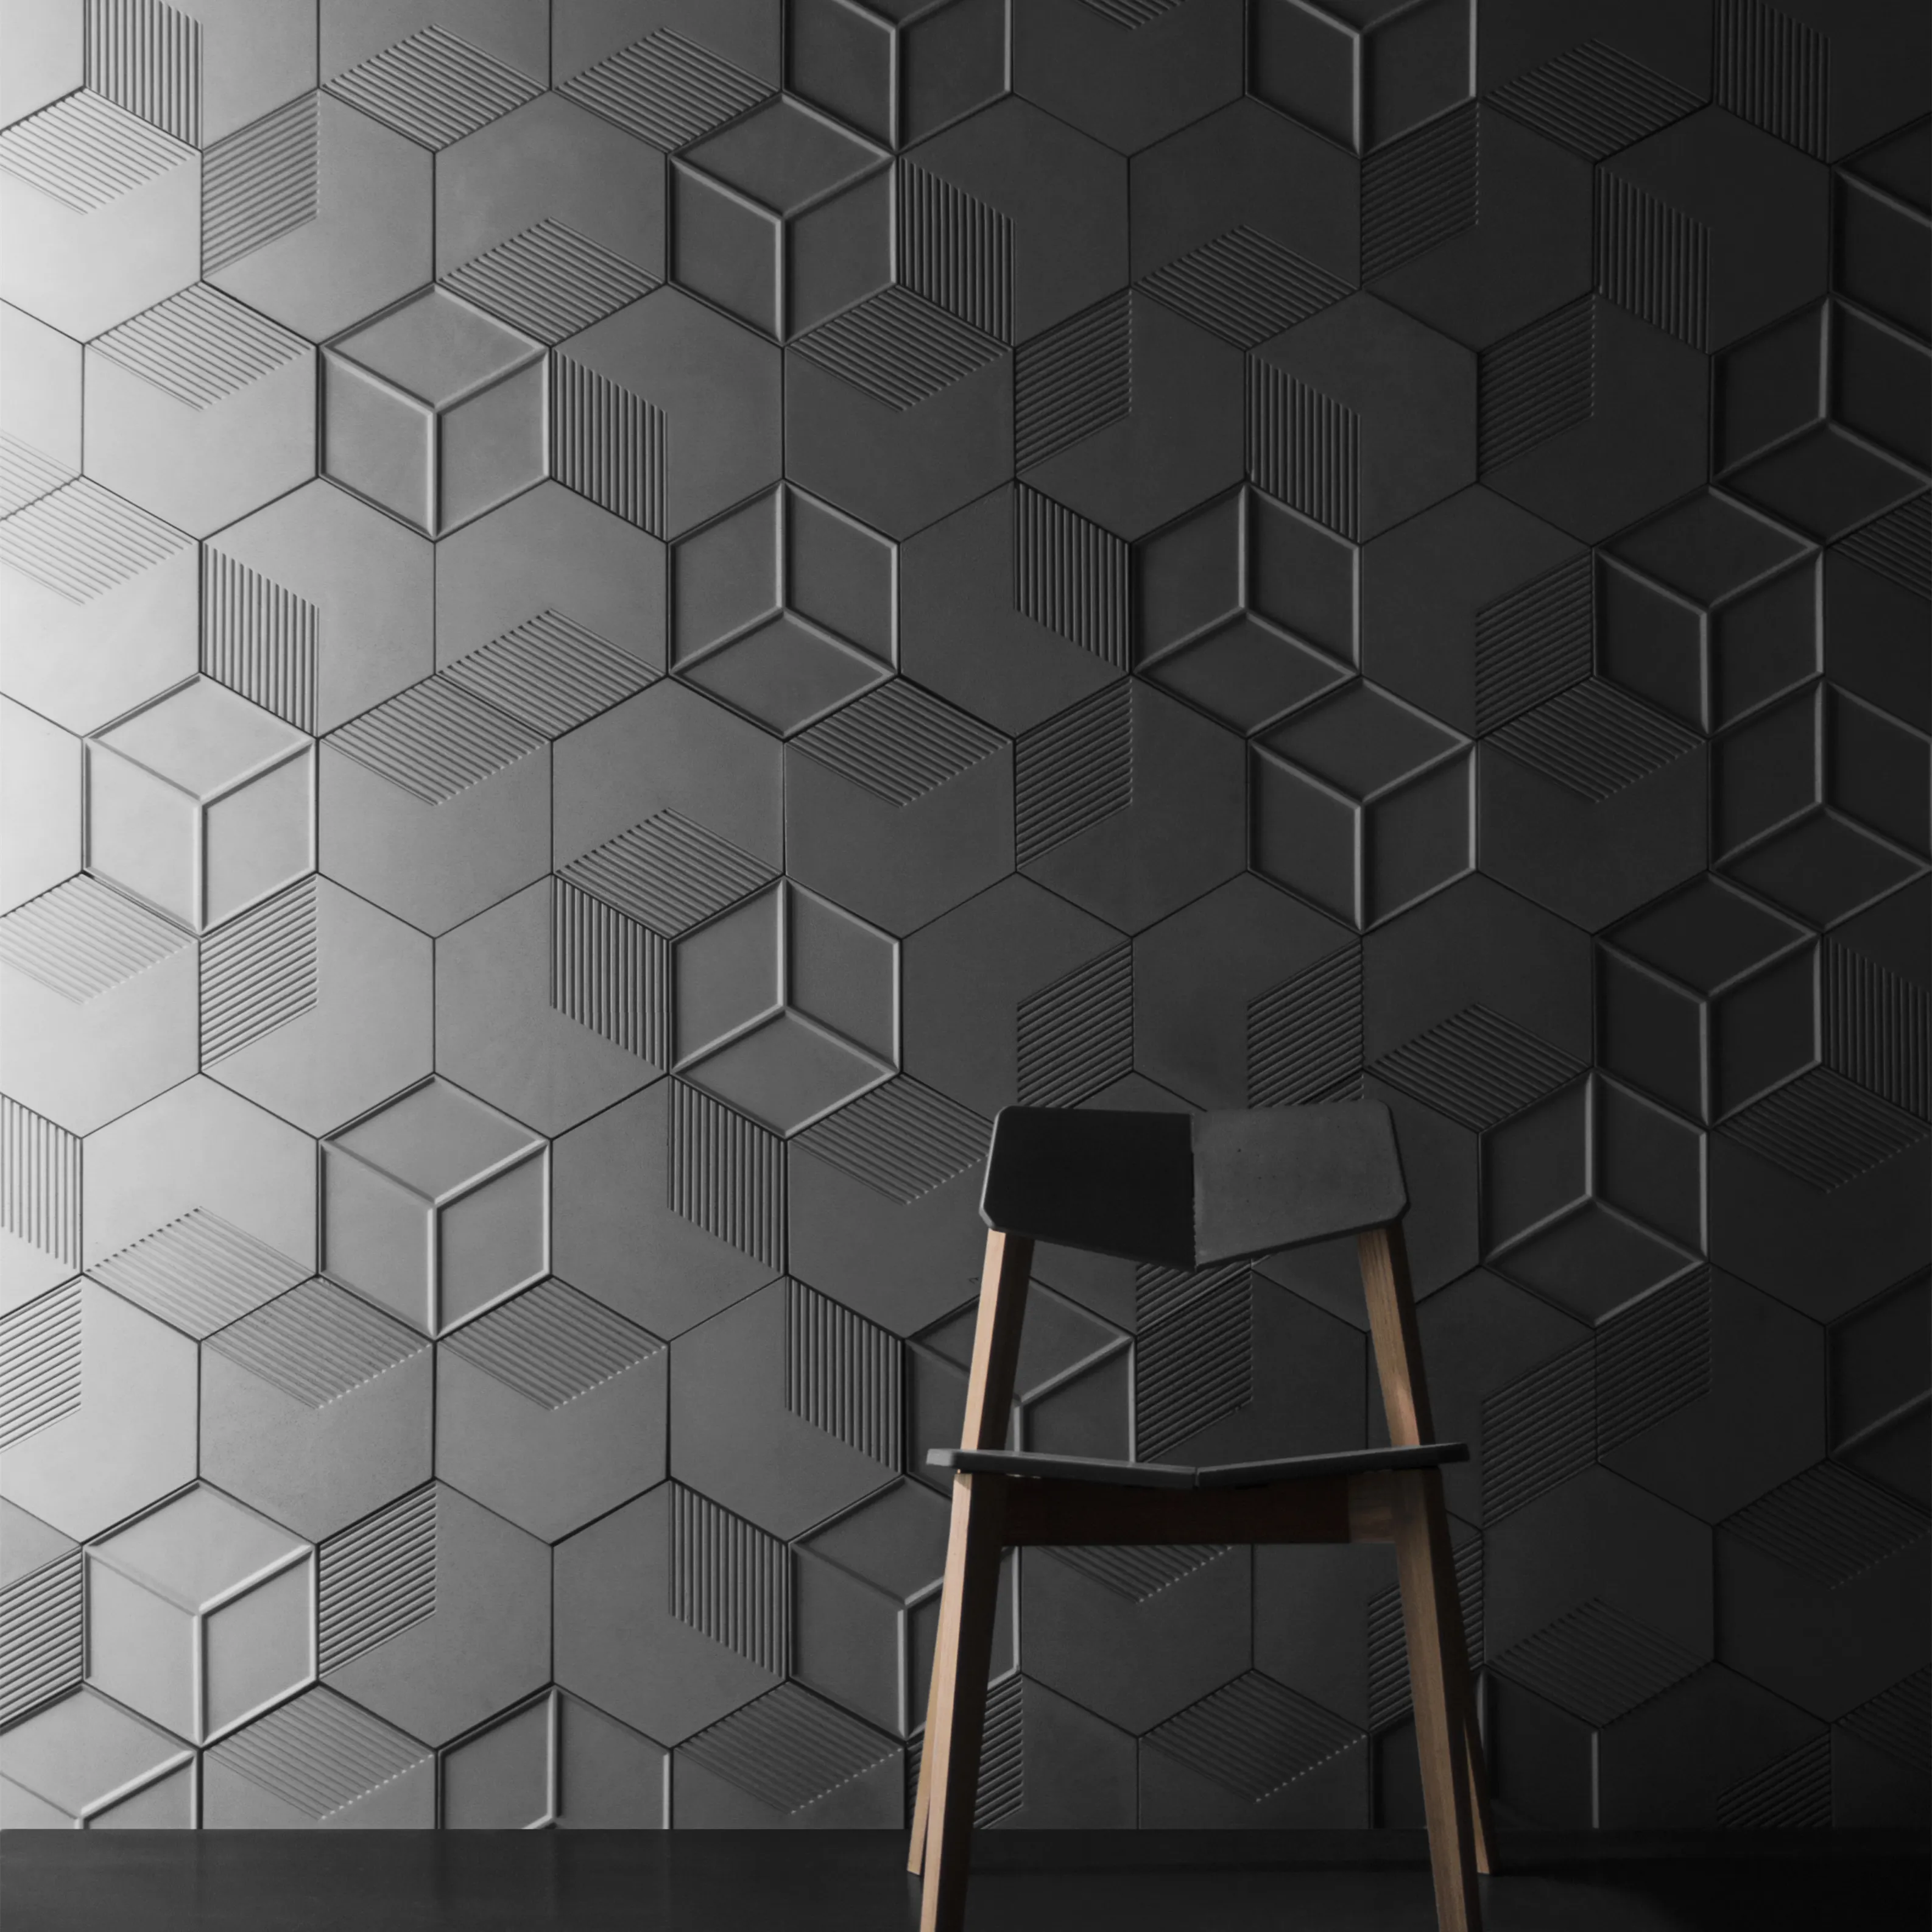 Bentu Six Sechseck Design dekorative Innen beton 3d Wandfliesen graue Wand Ziegel für Wohnzimmer Schlafzimmer